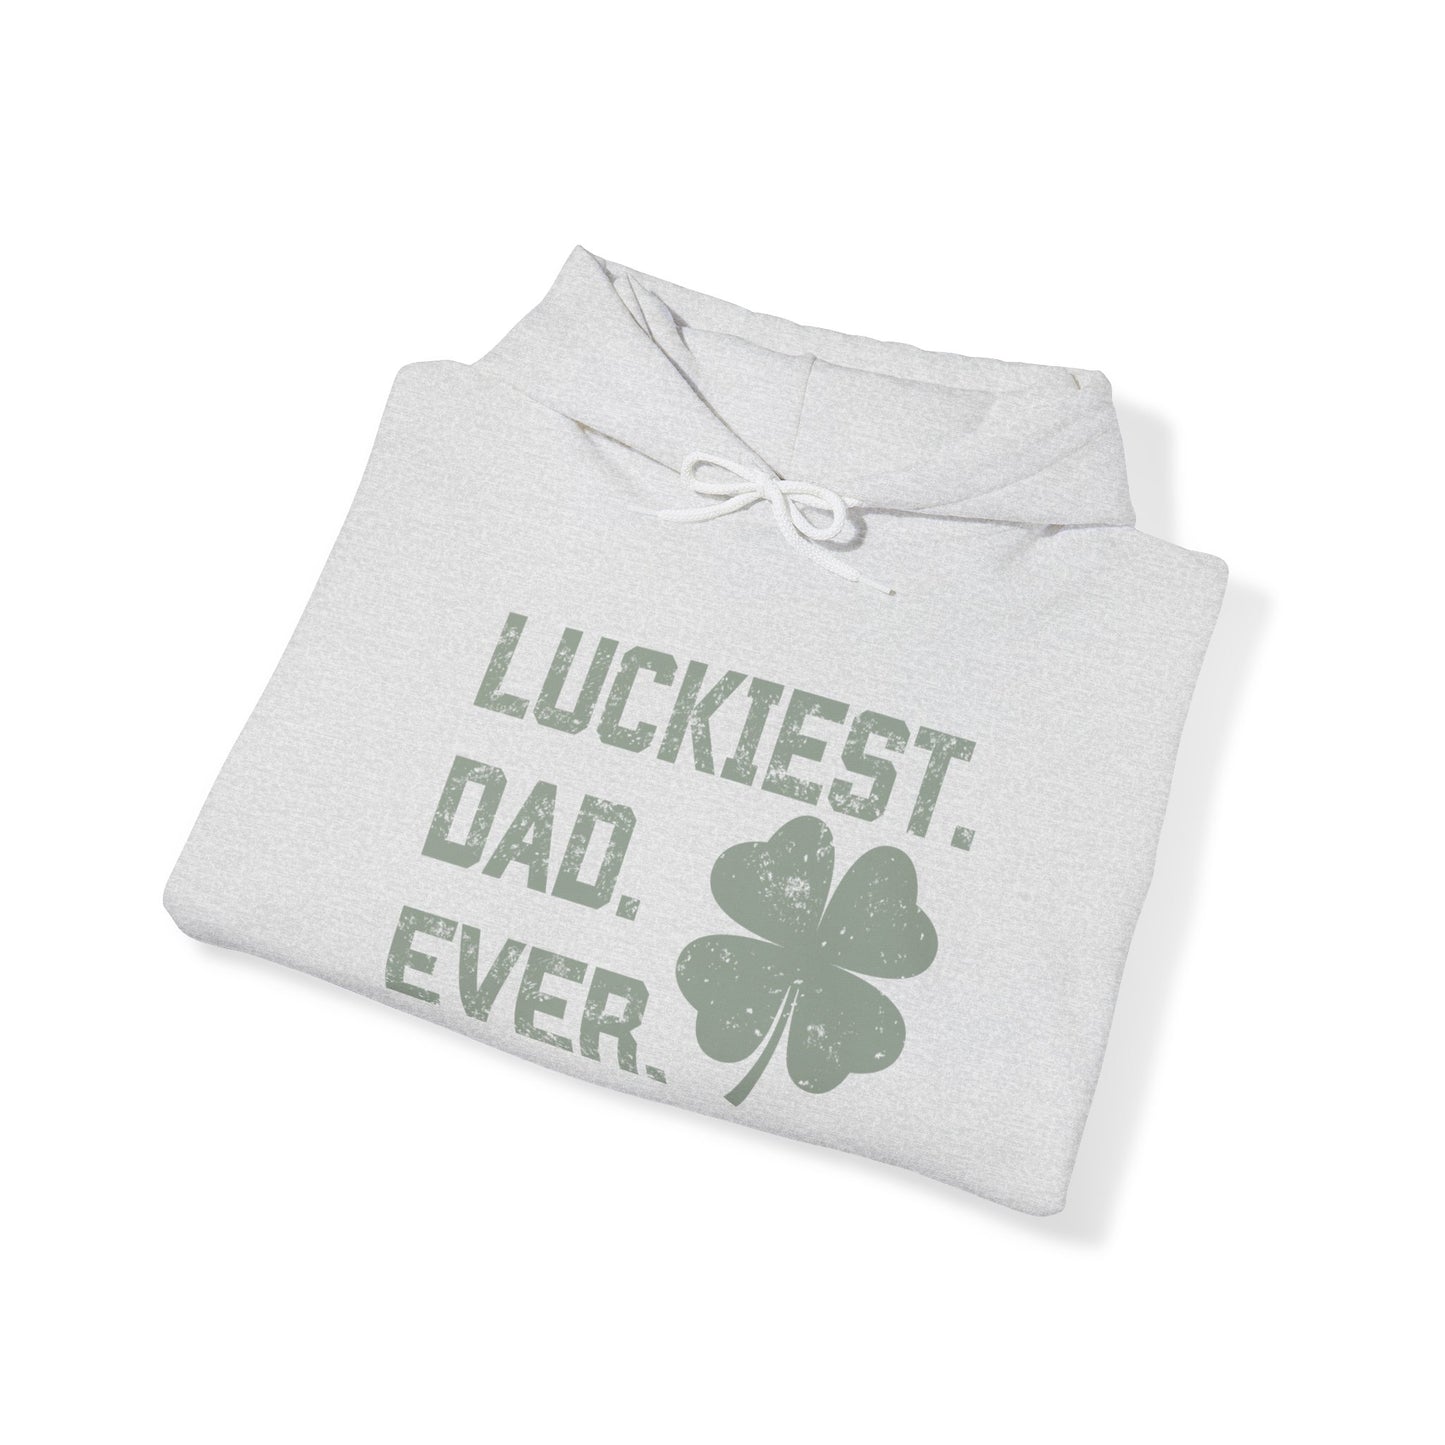 Luckiest Dad Ever - Hooded Sweatshirt - St. Patrick's Day Sweatshirt for Dad